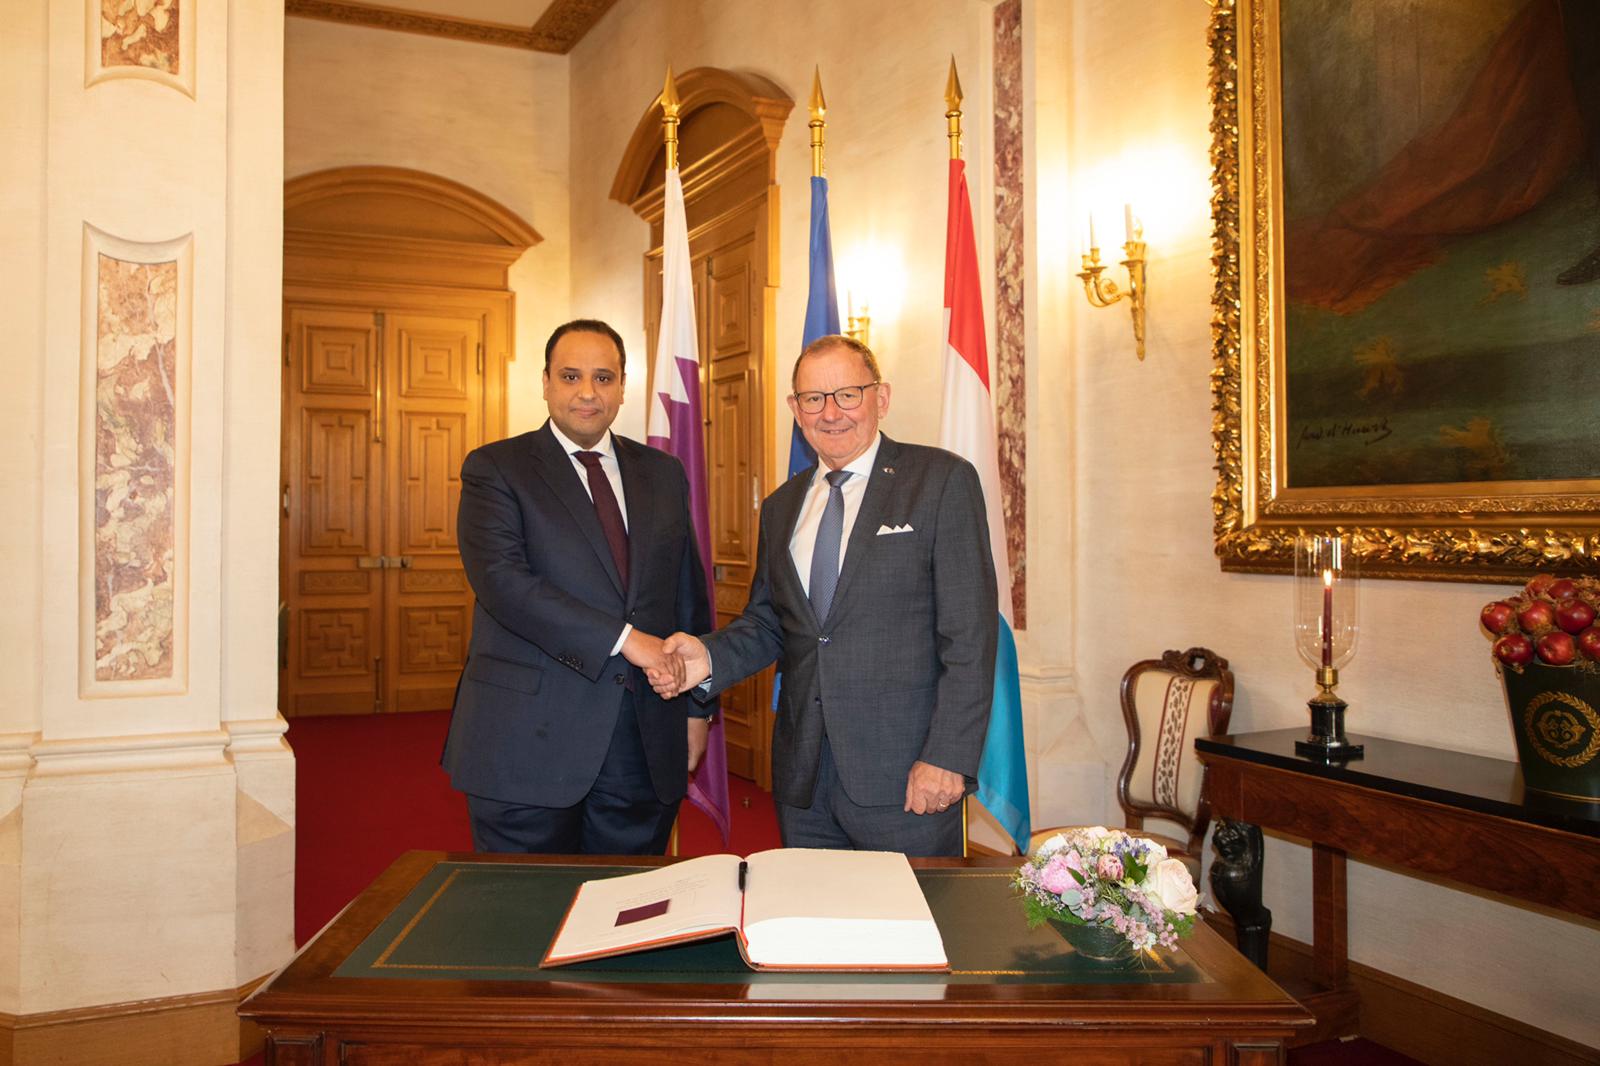 President of Luxembourg Chamber of Deputies Meets Qatar's Ambassador